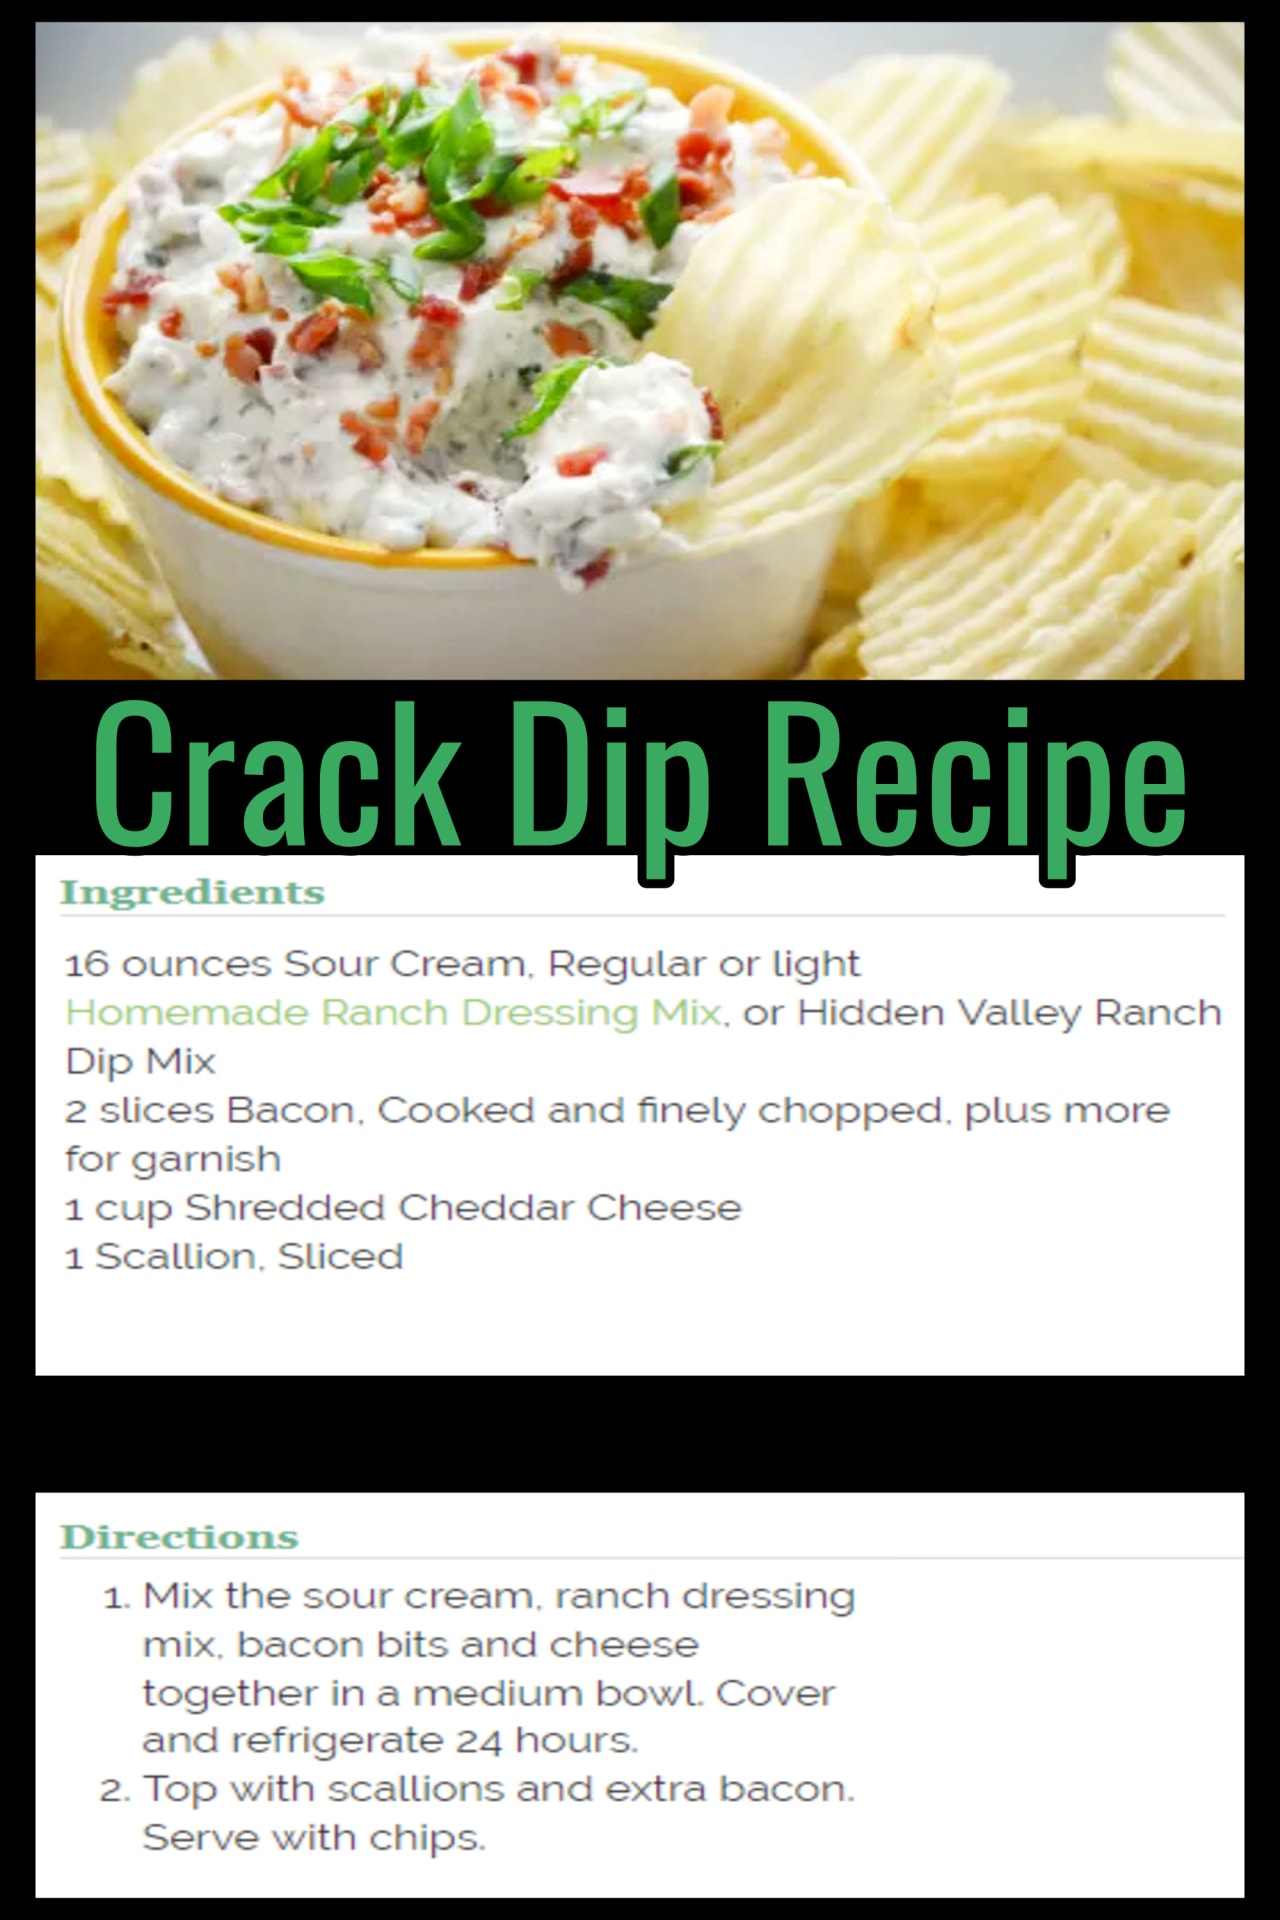 easy party dips - crack dip recipe